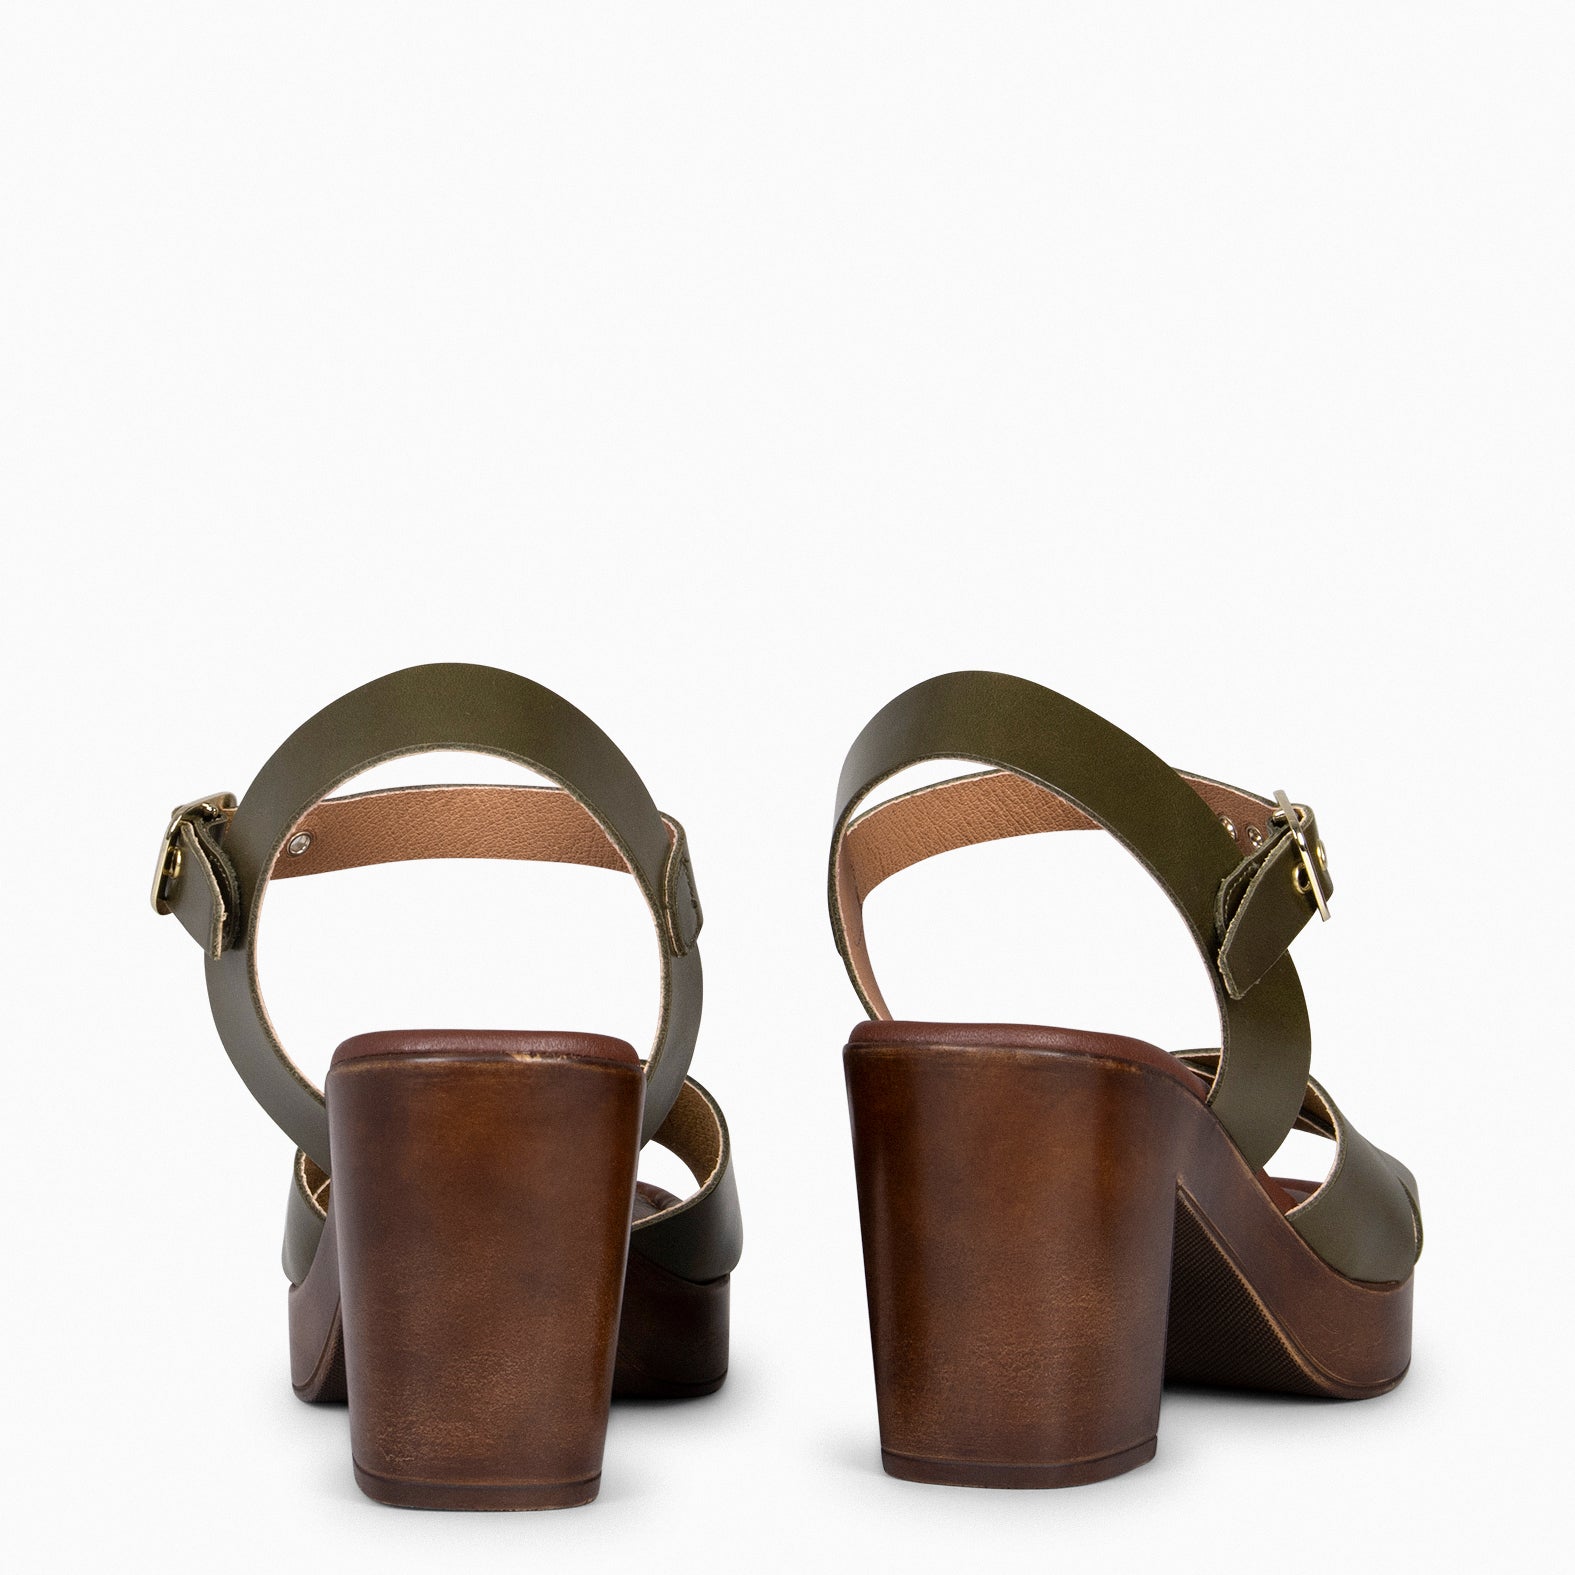 TAVIRA – Sandales en cuir KAKI et à talon bois 